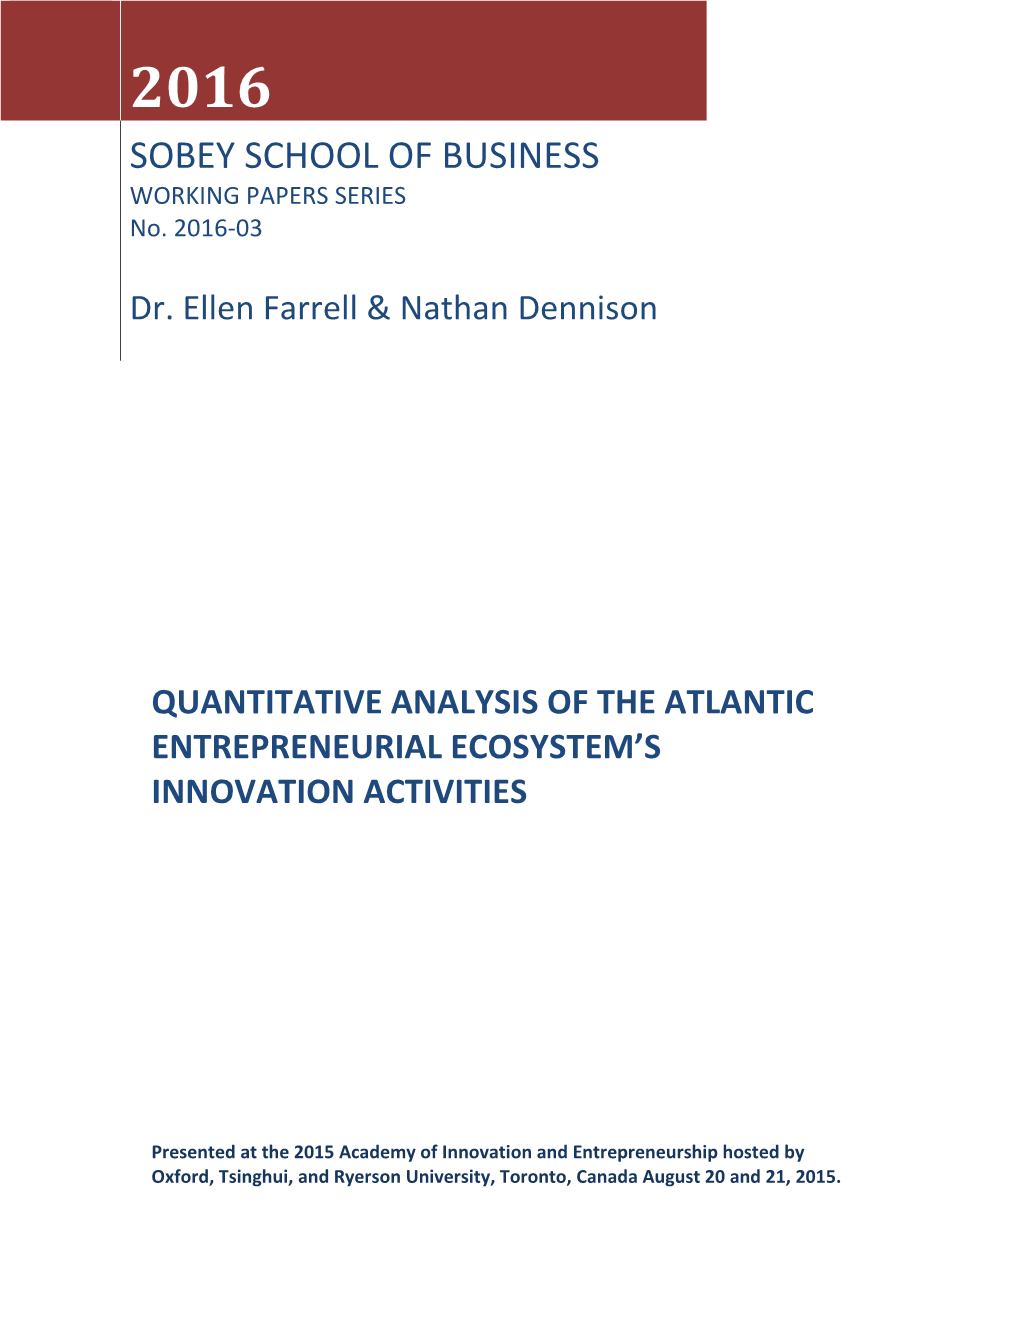 Quantitative Analysis of the Atlantic Entrepreneurial Ecosystem's